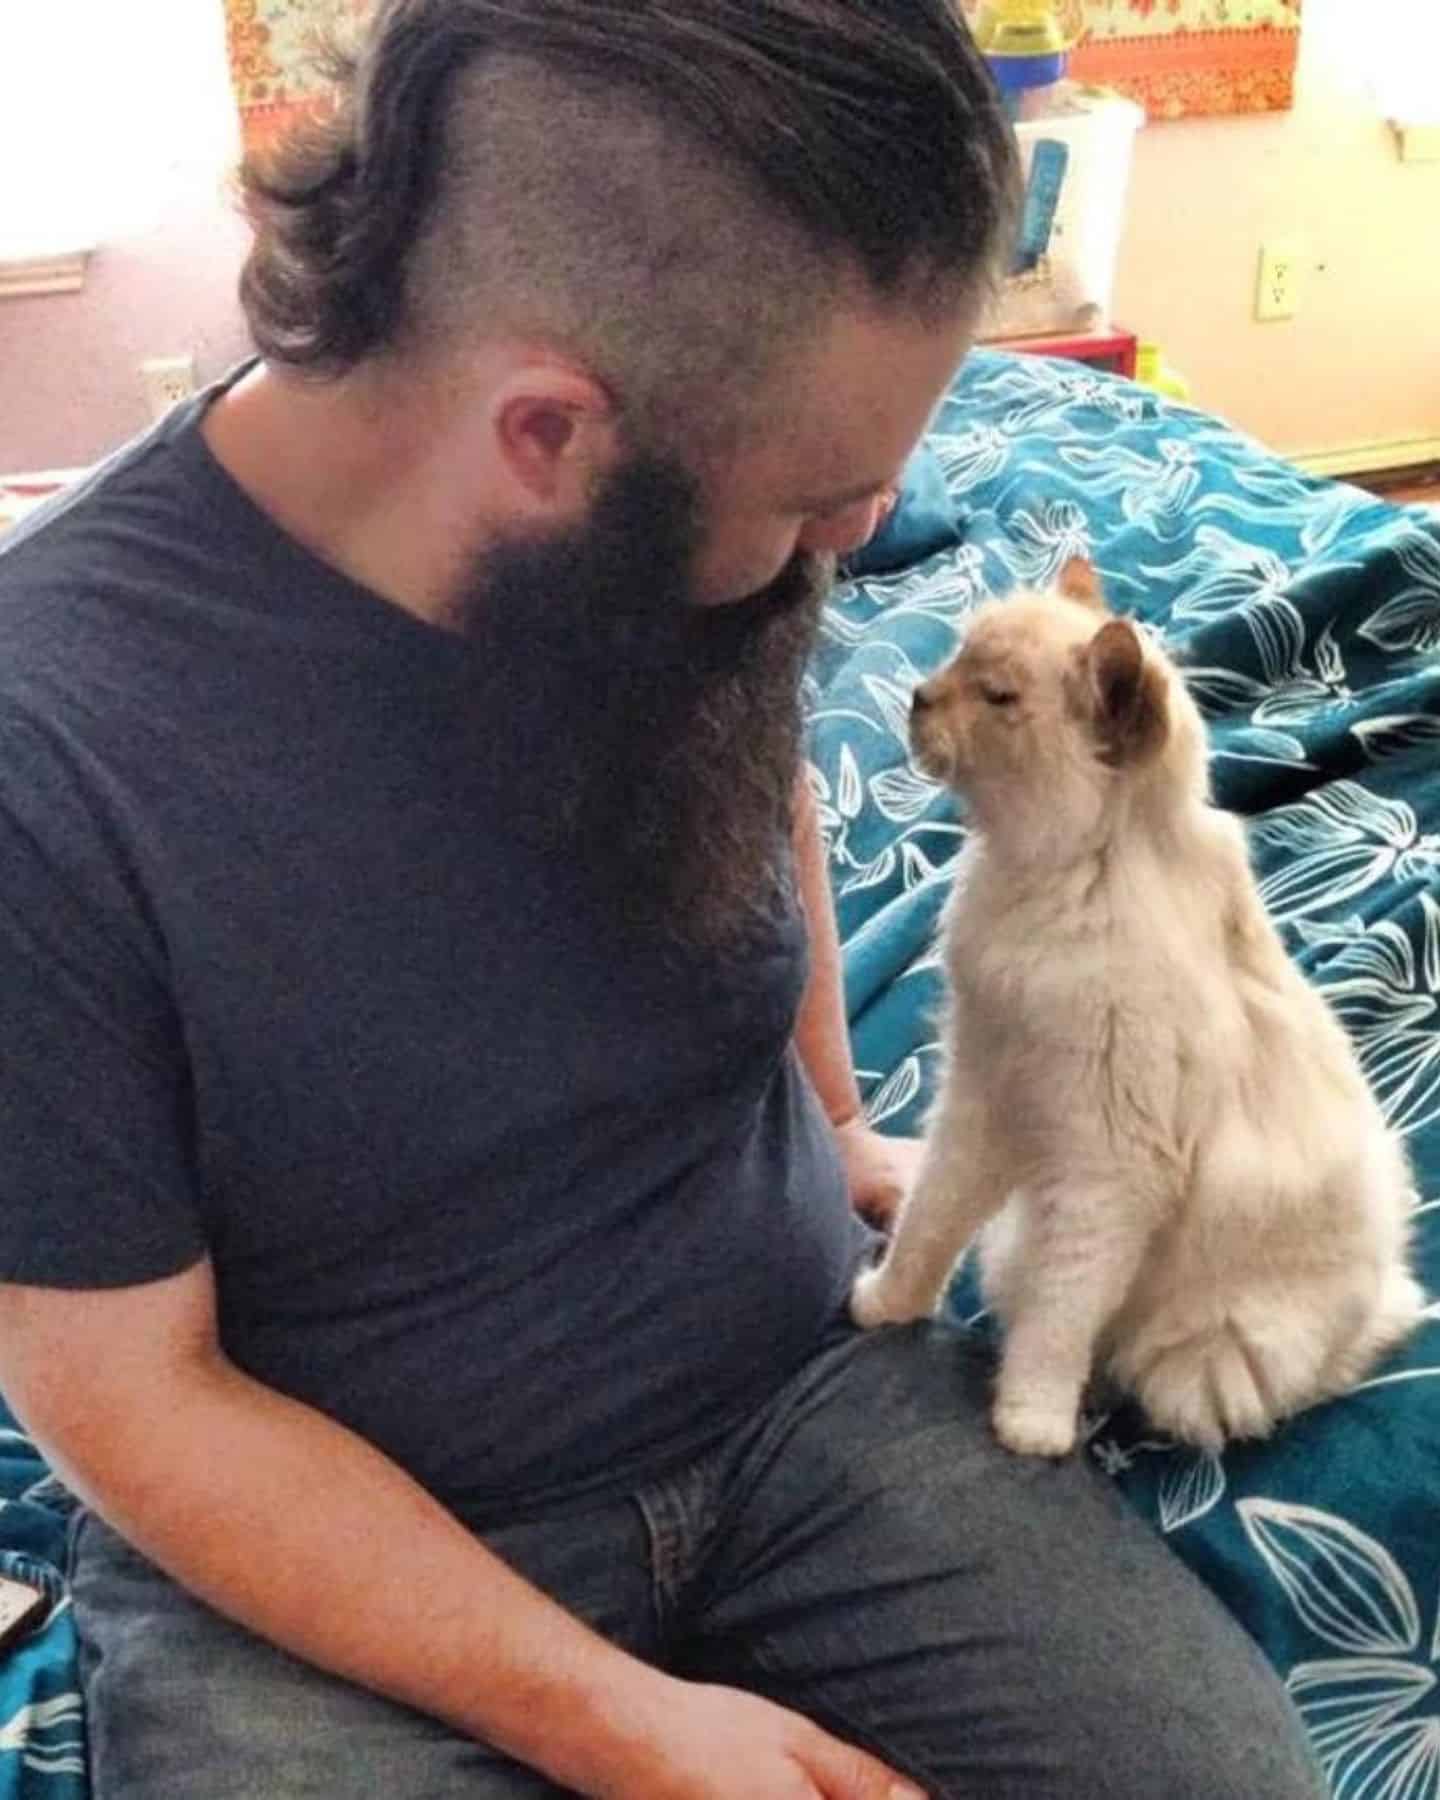 man with beard looking at cat